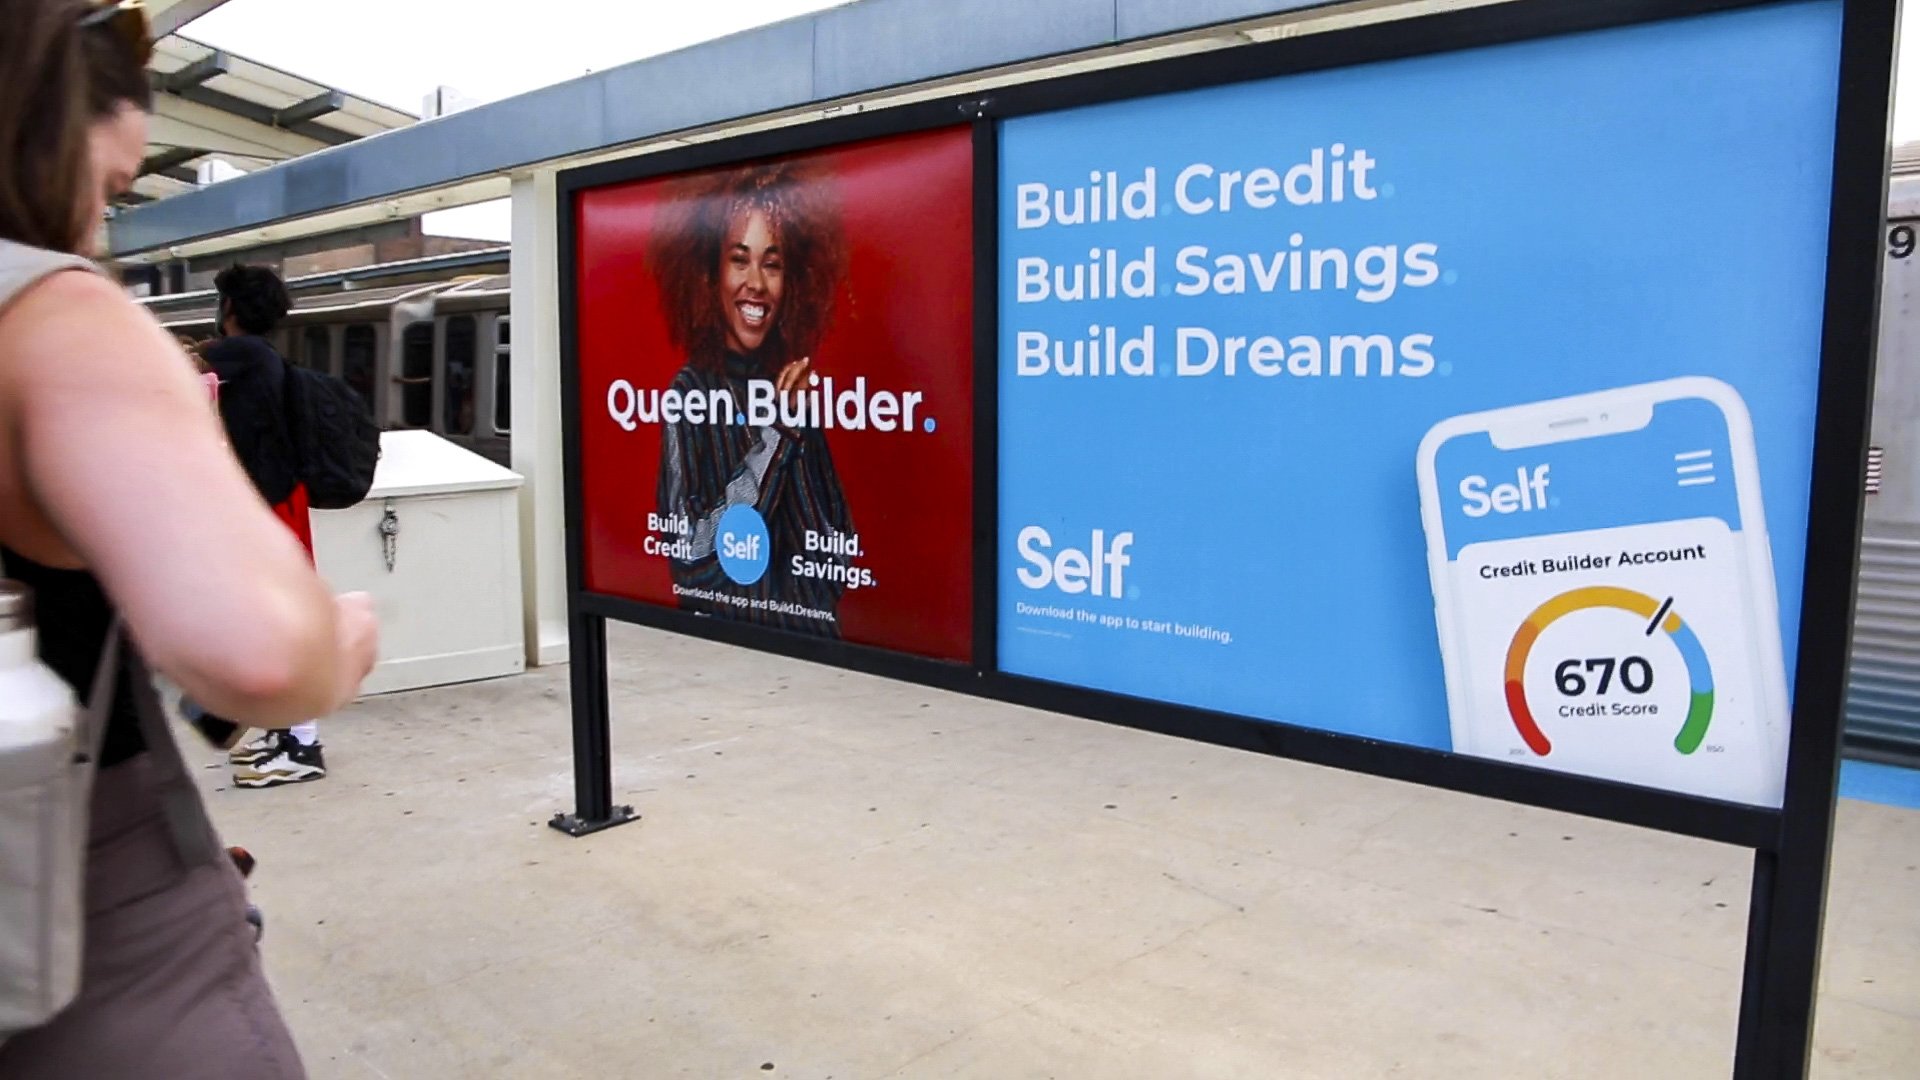 Self Financial Transit Creative Corner Billboard Advertising.jpeg